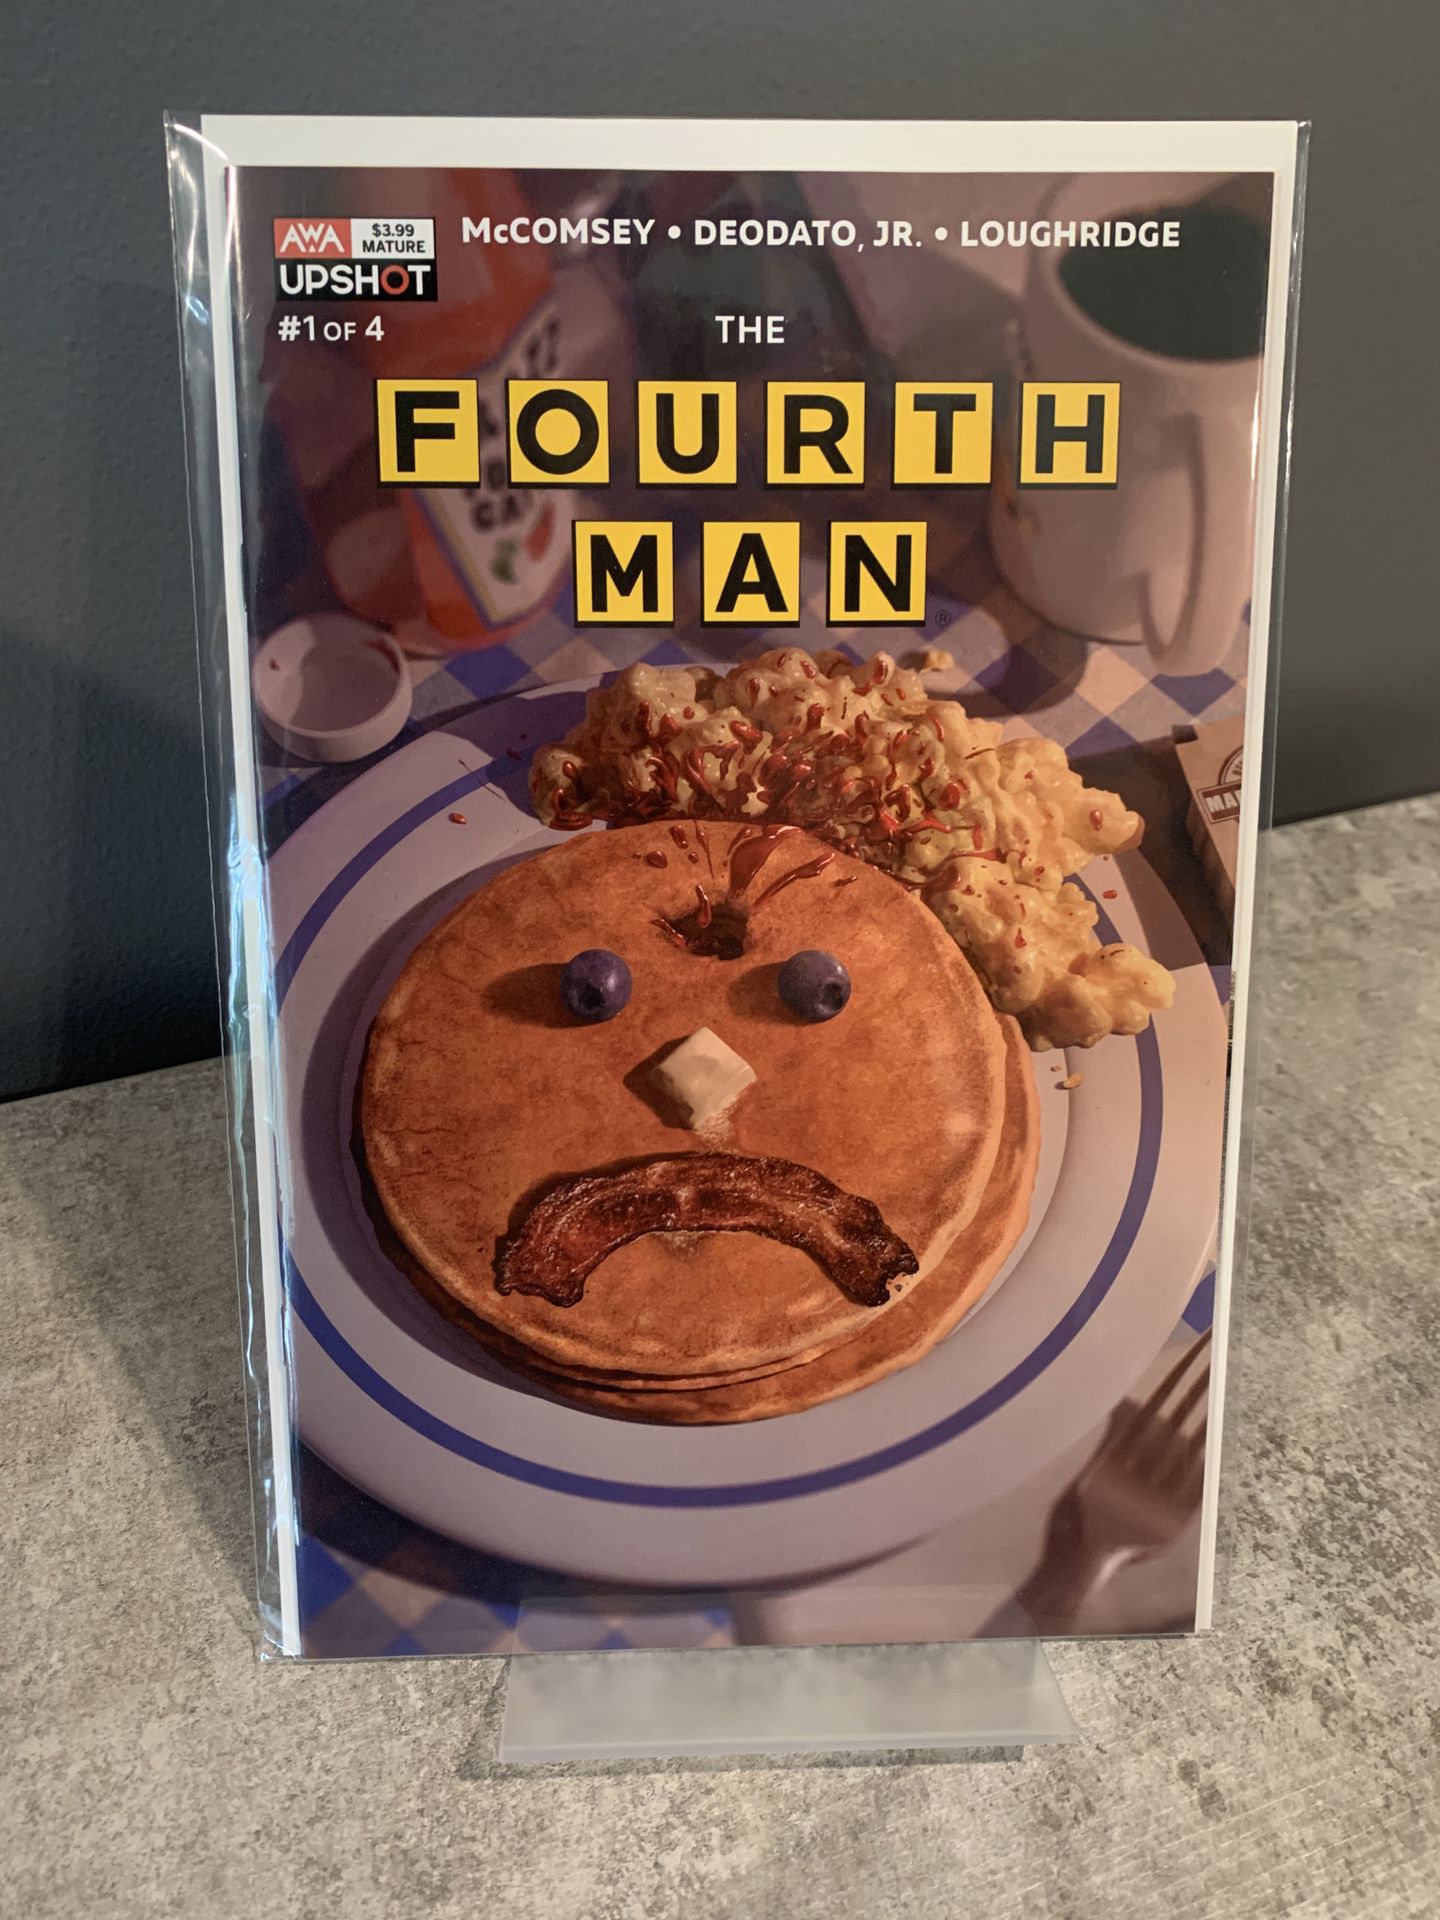 The Fourth Man #1 (AWA Studios, 2022) Variant Cover